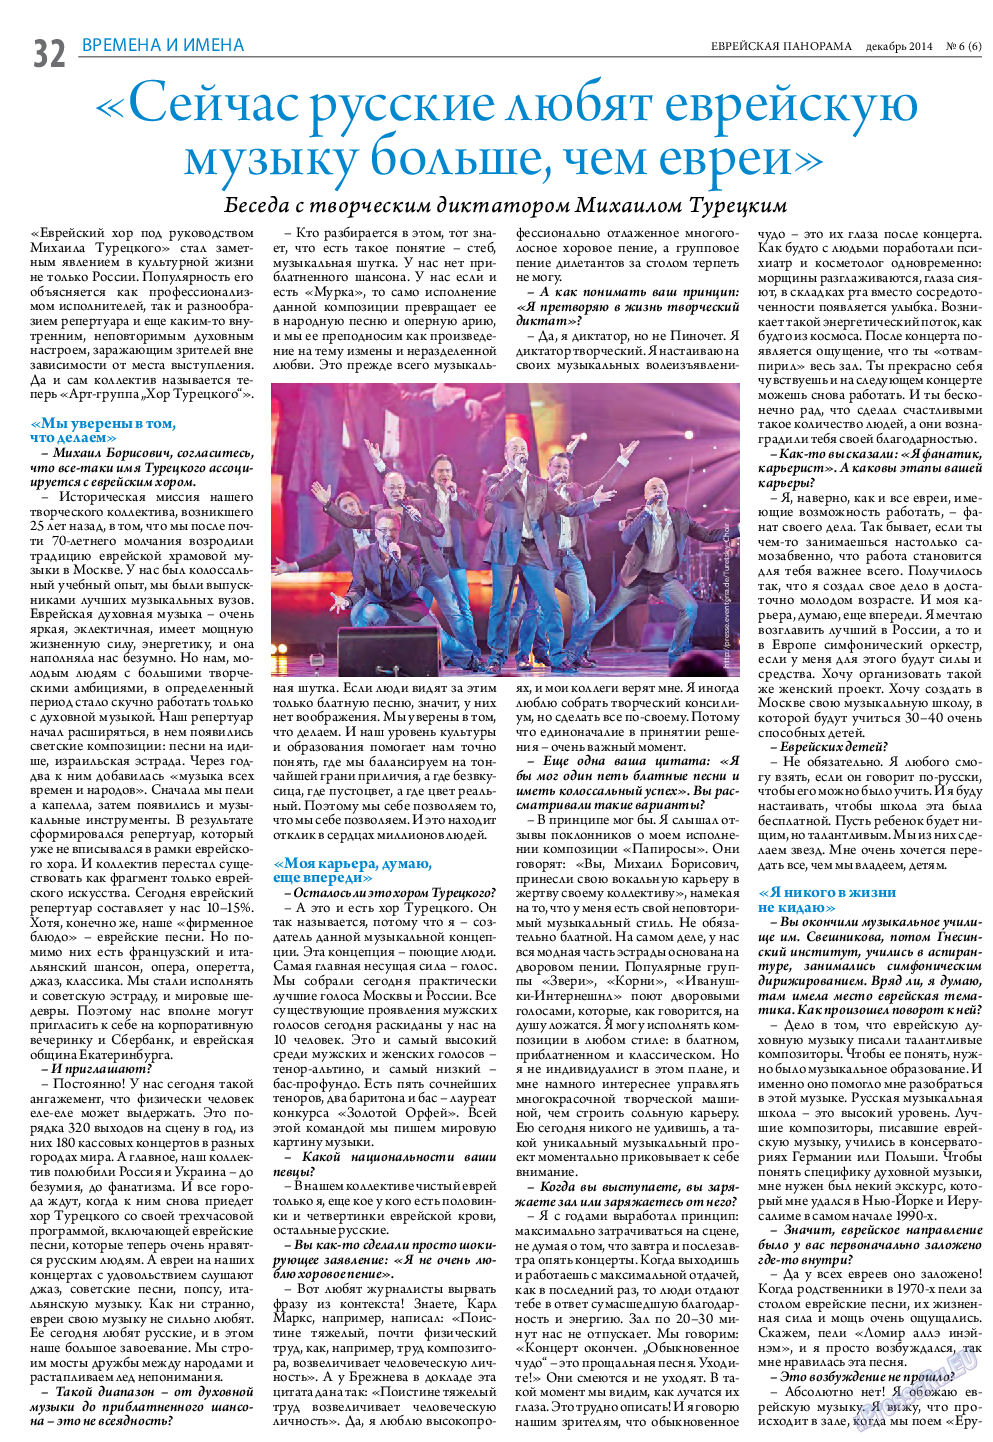 Еврейская панорама, газета. 2014 №6 стр.32